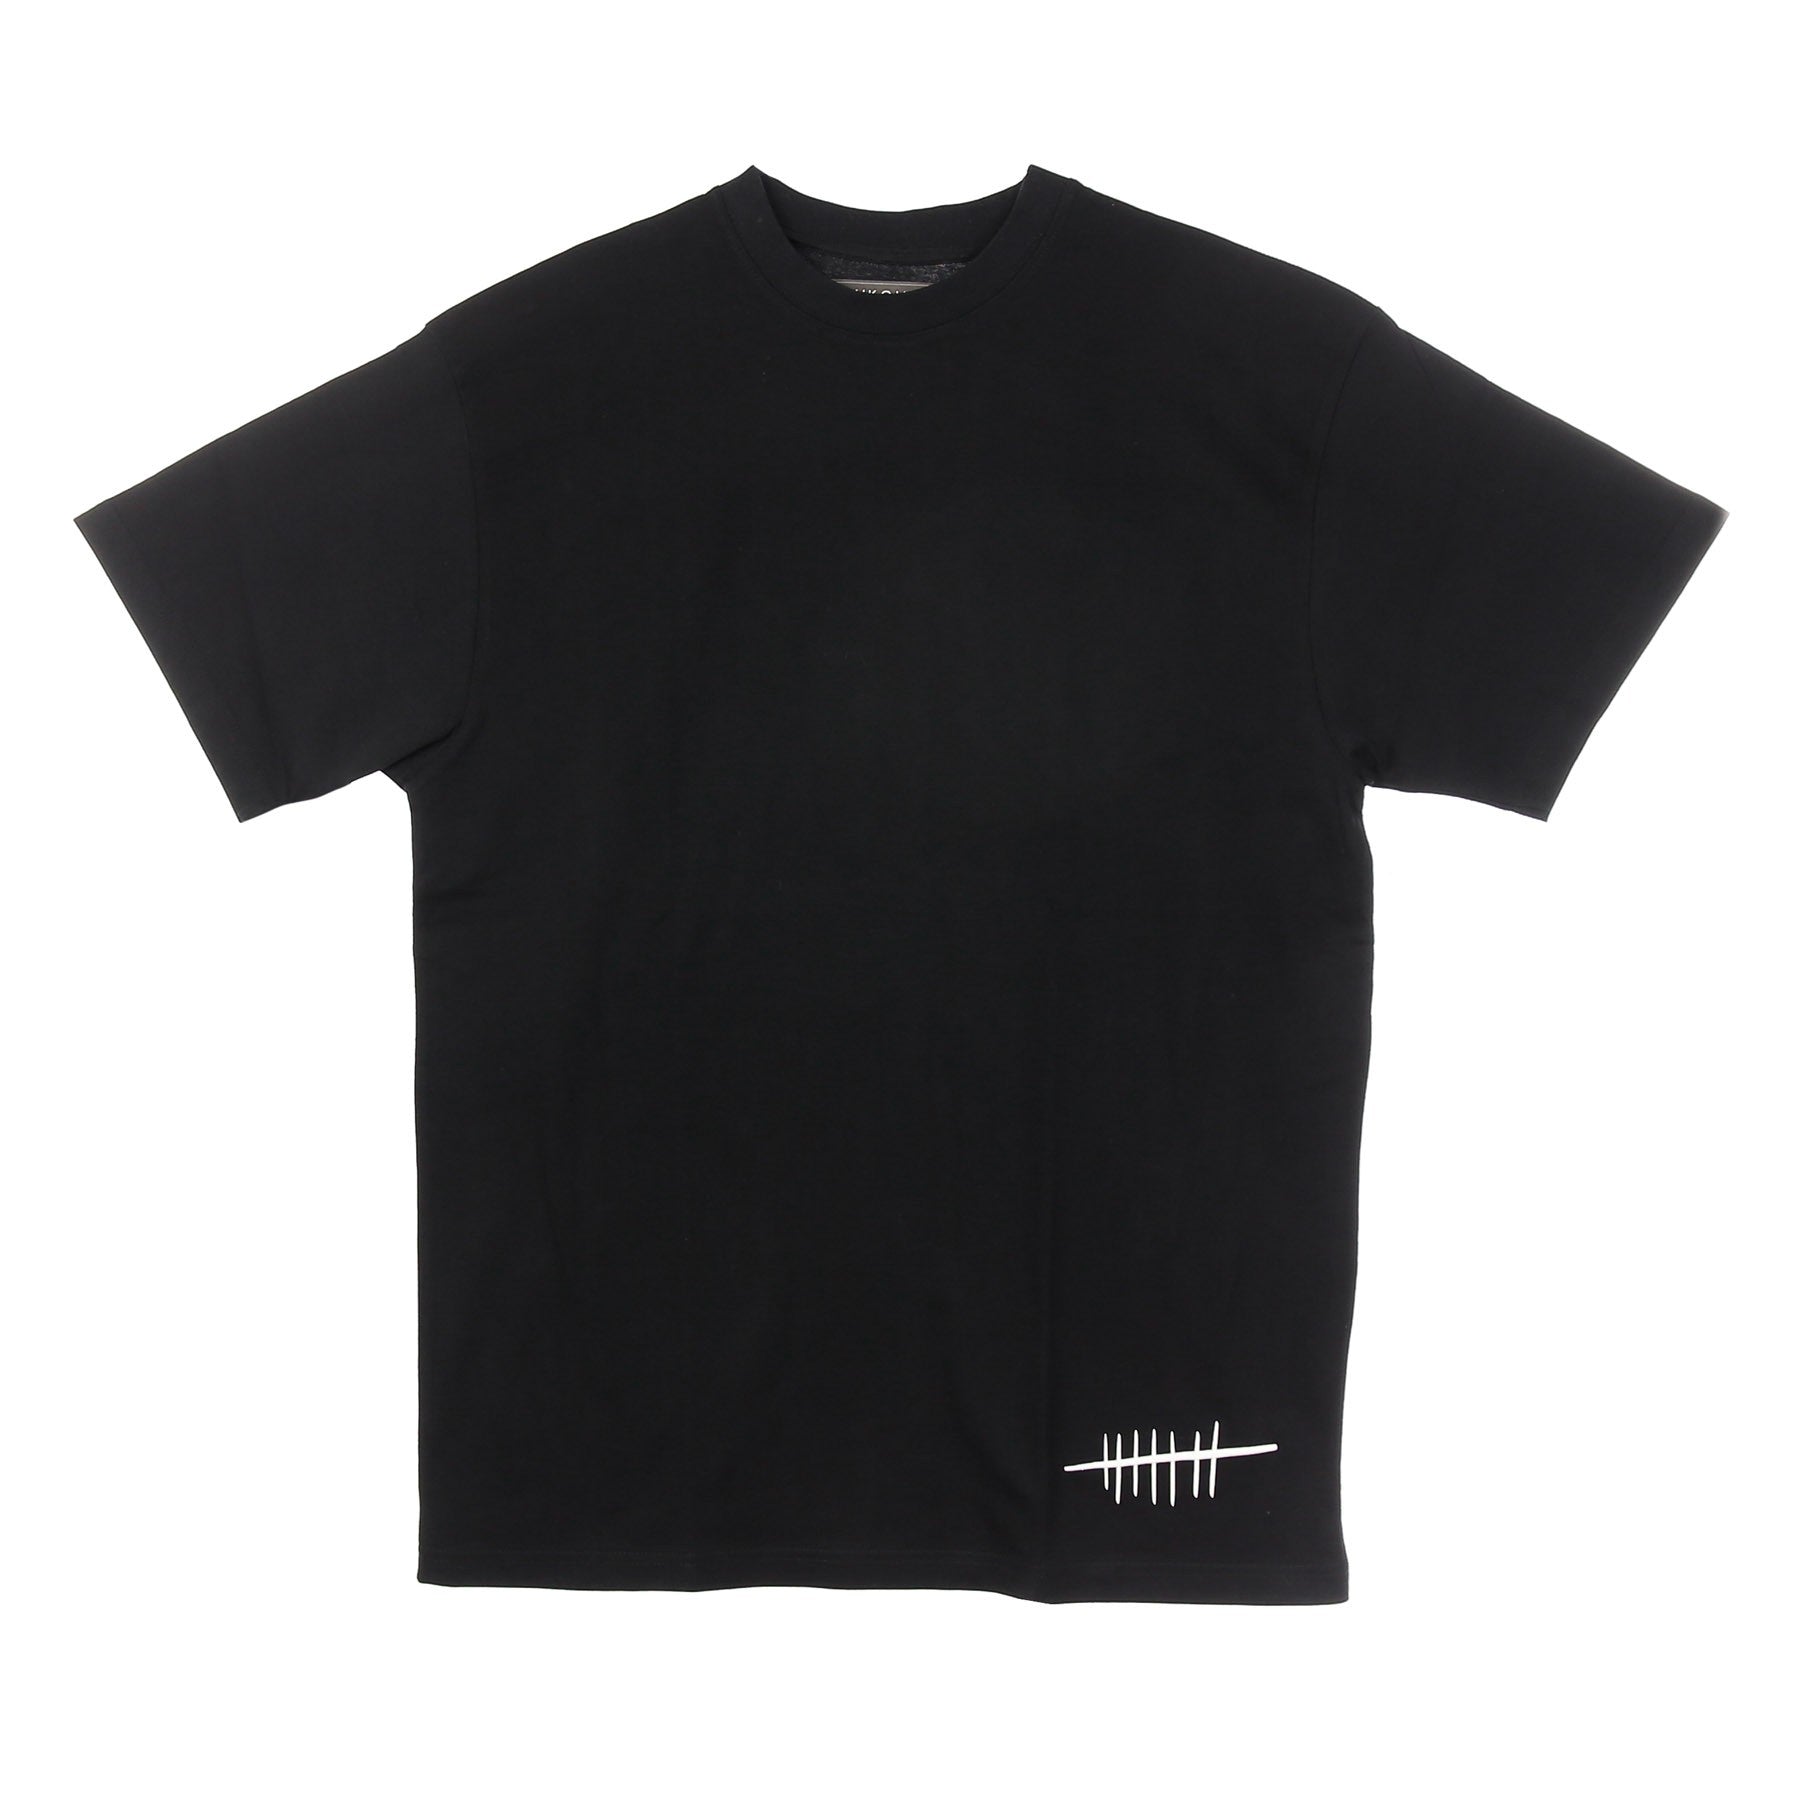 Inkover Tee 1 Men's T-Shirt Black/cyan